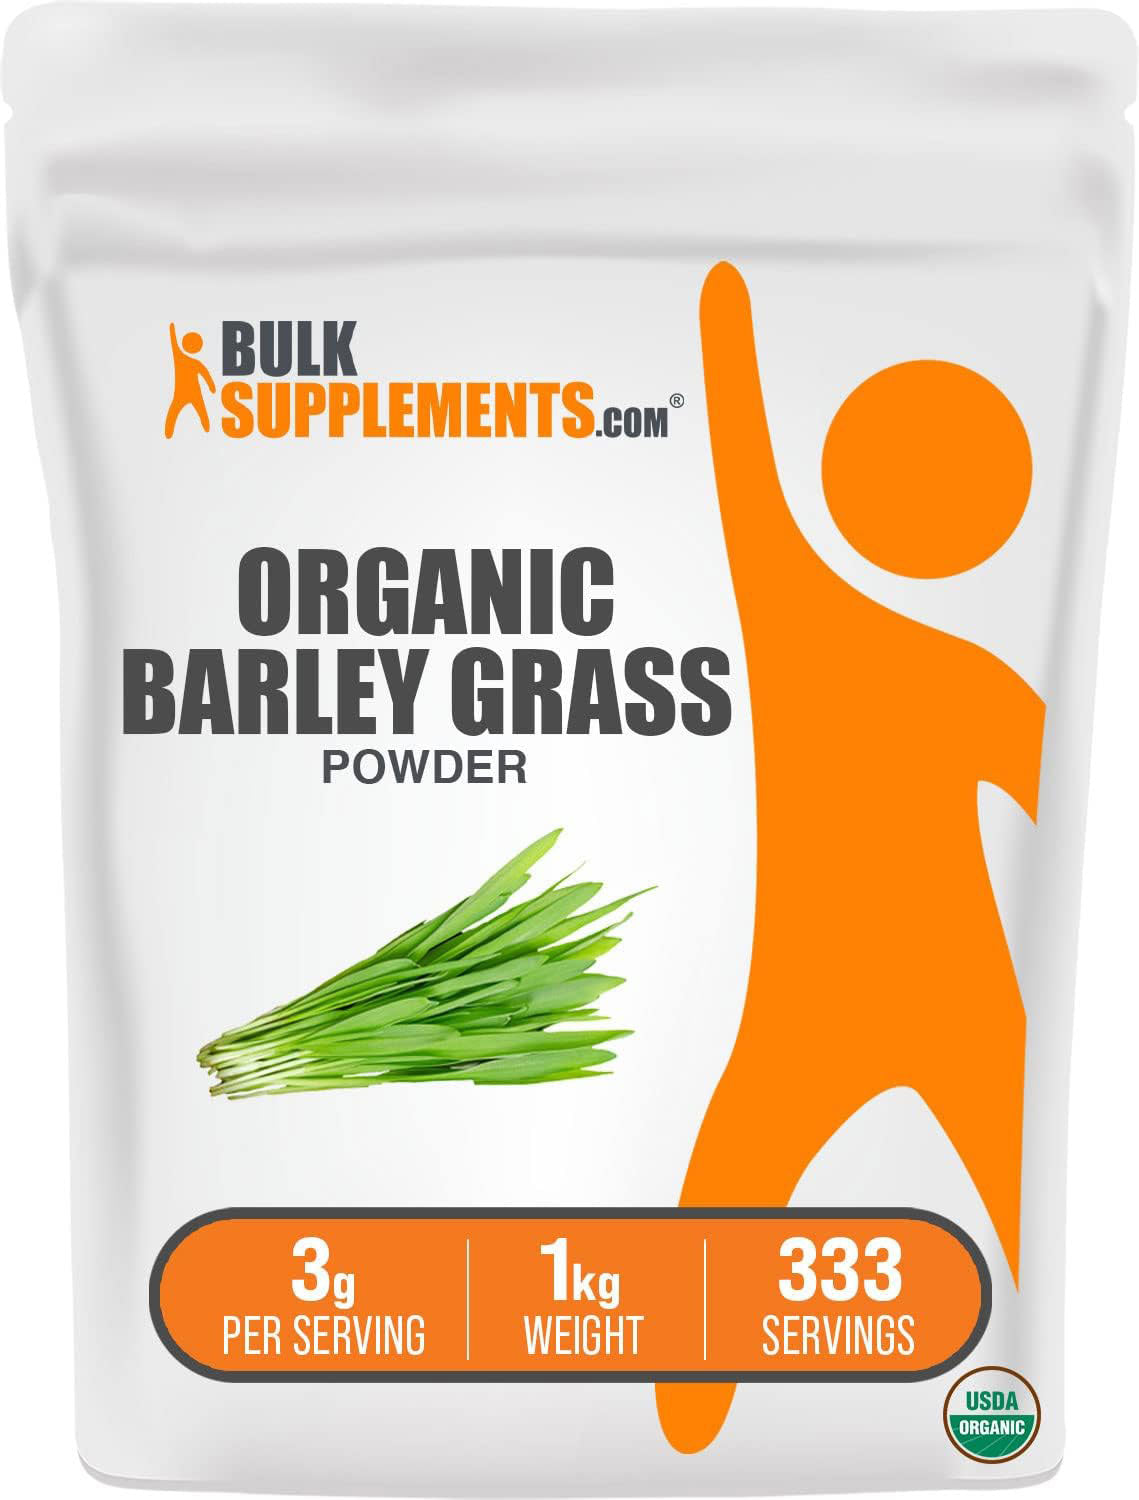 Organic Barley Grass Powder 1kg Bag with 333 servings 